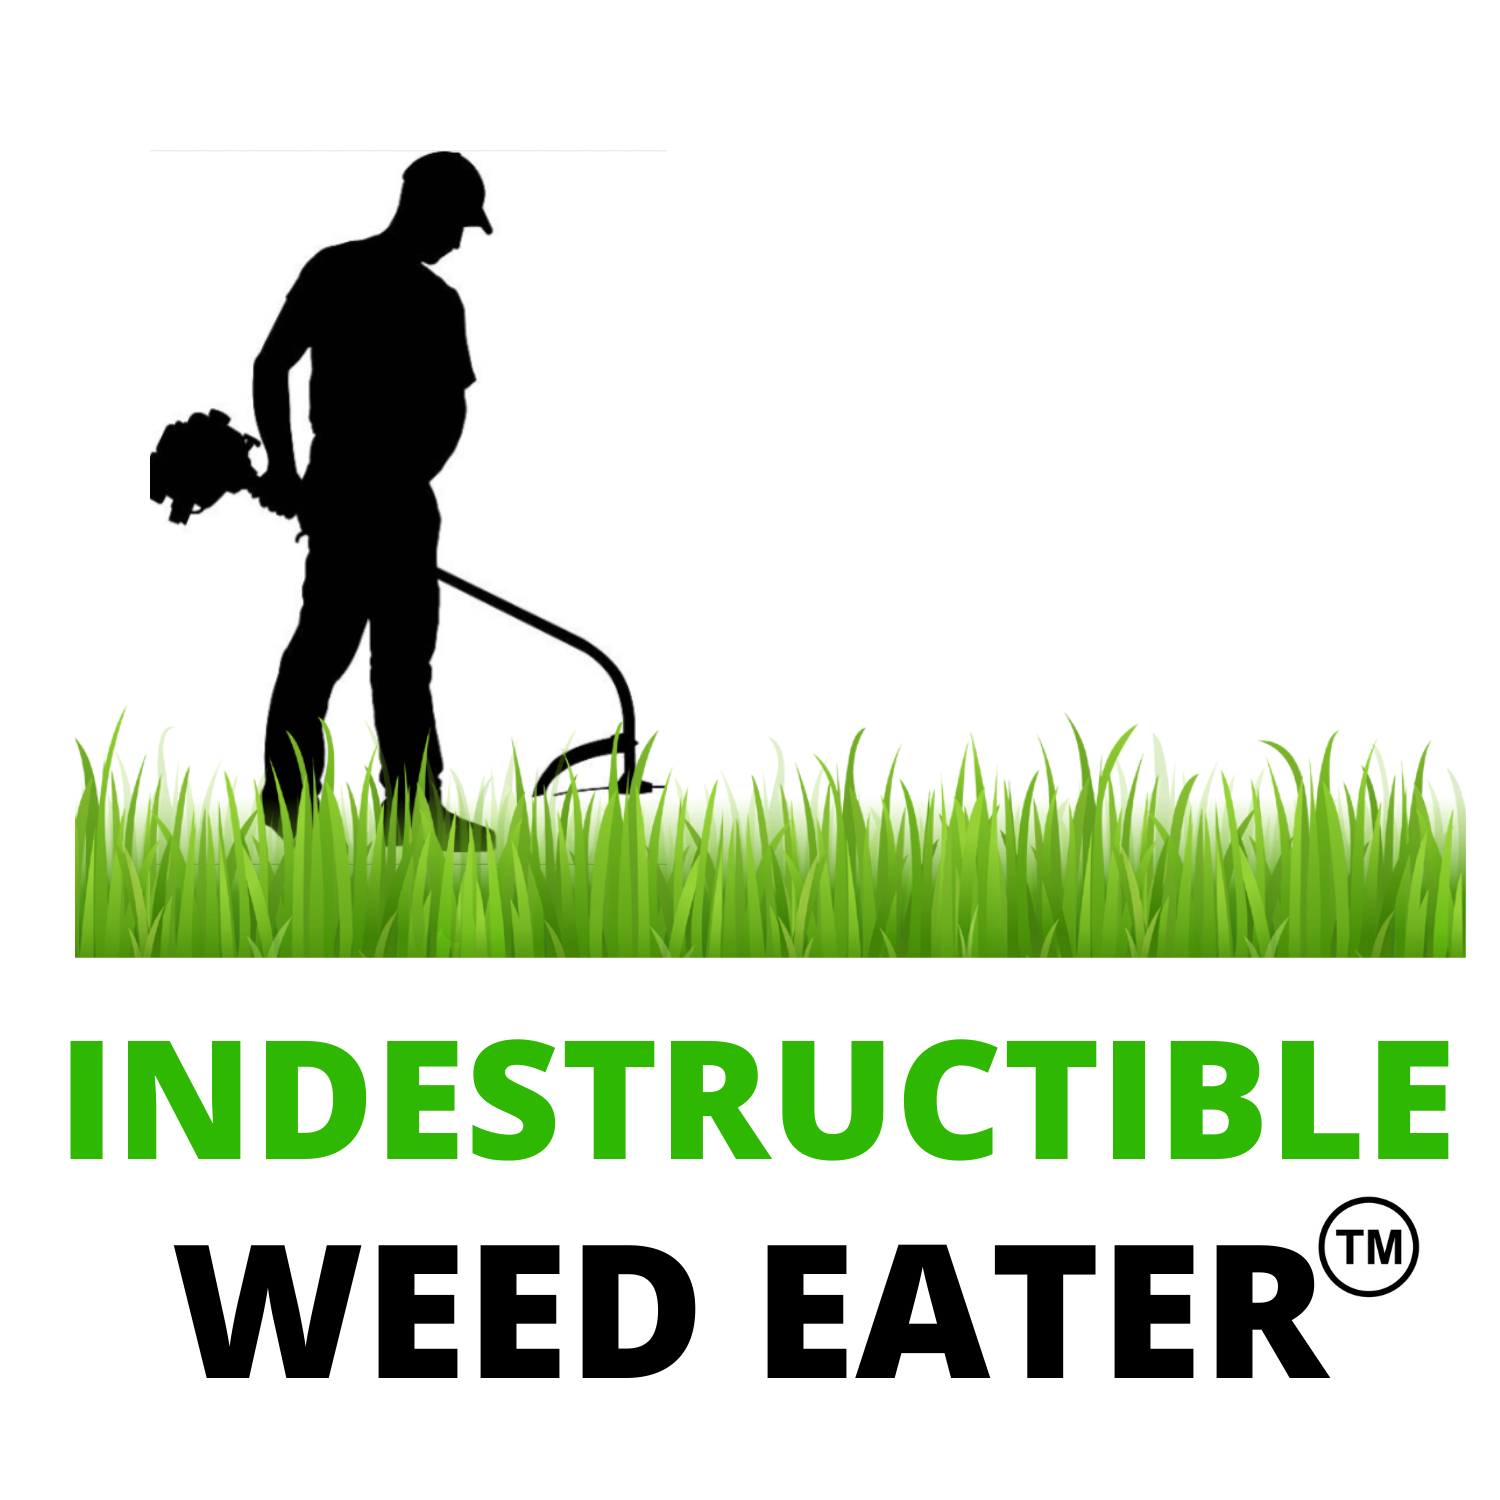 indestructible weed trimmer